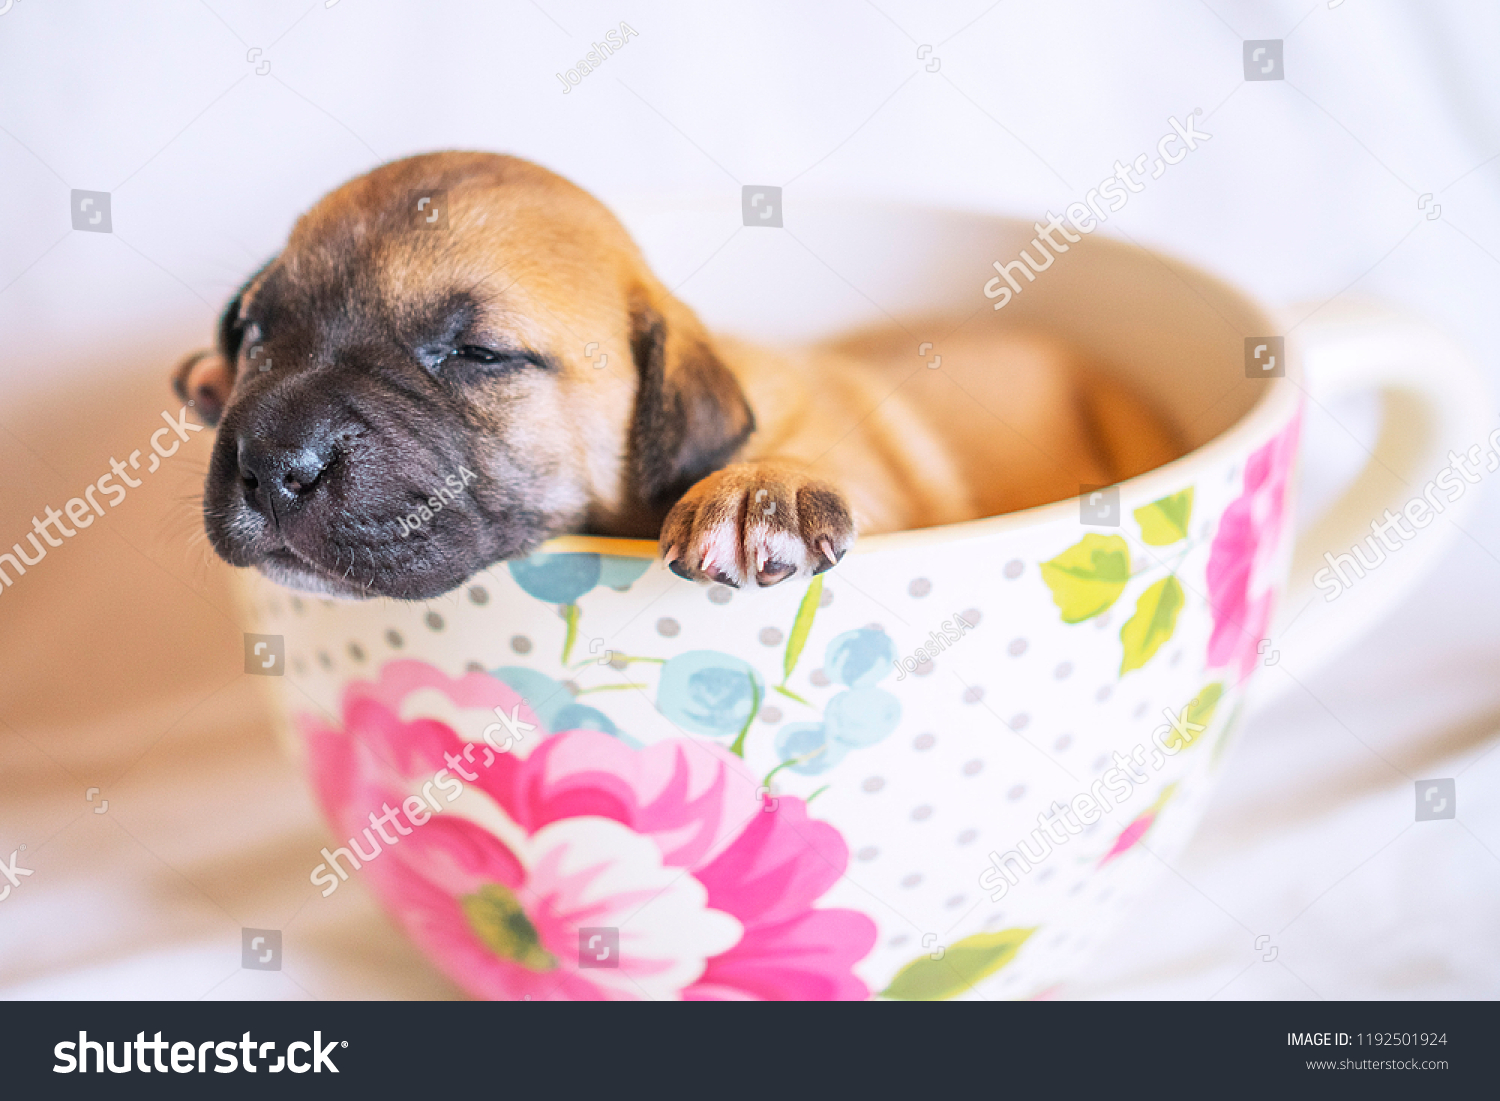 Cute Teacup Puppy Animals Wildlife Stock Image